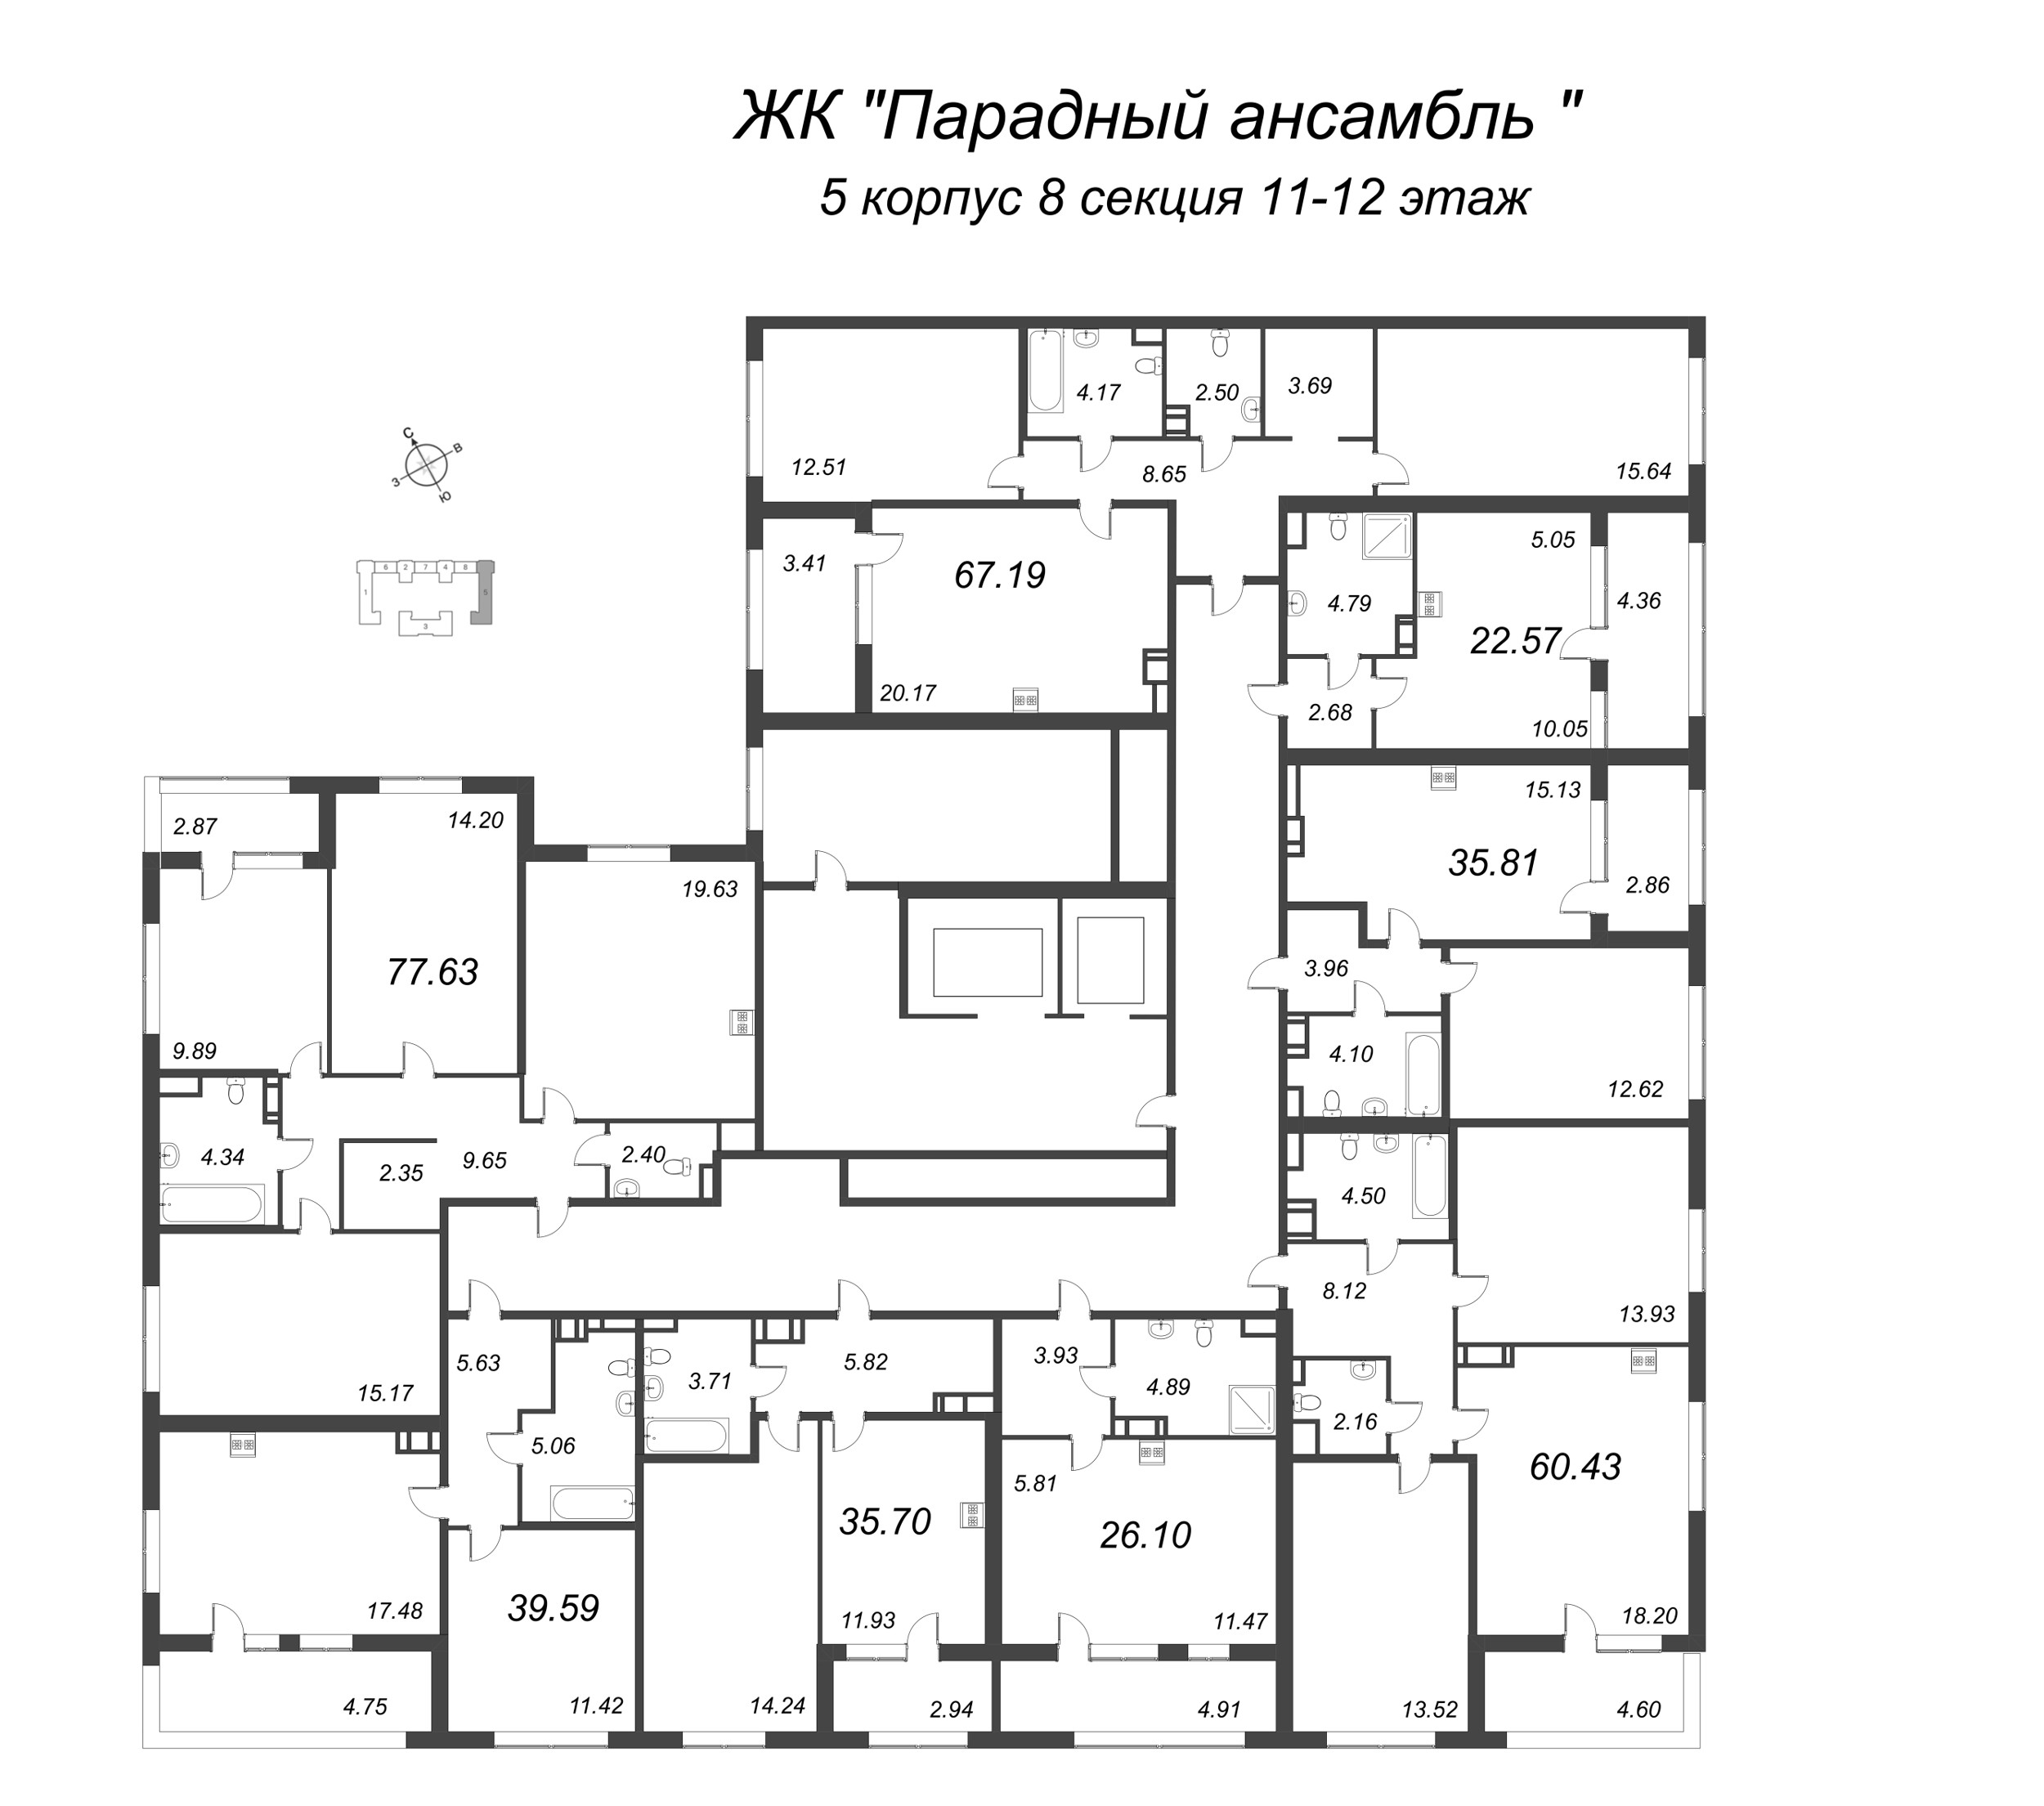 4-комнатная (Евро) квартира, 77.63 м² - планировка этажа